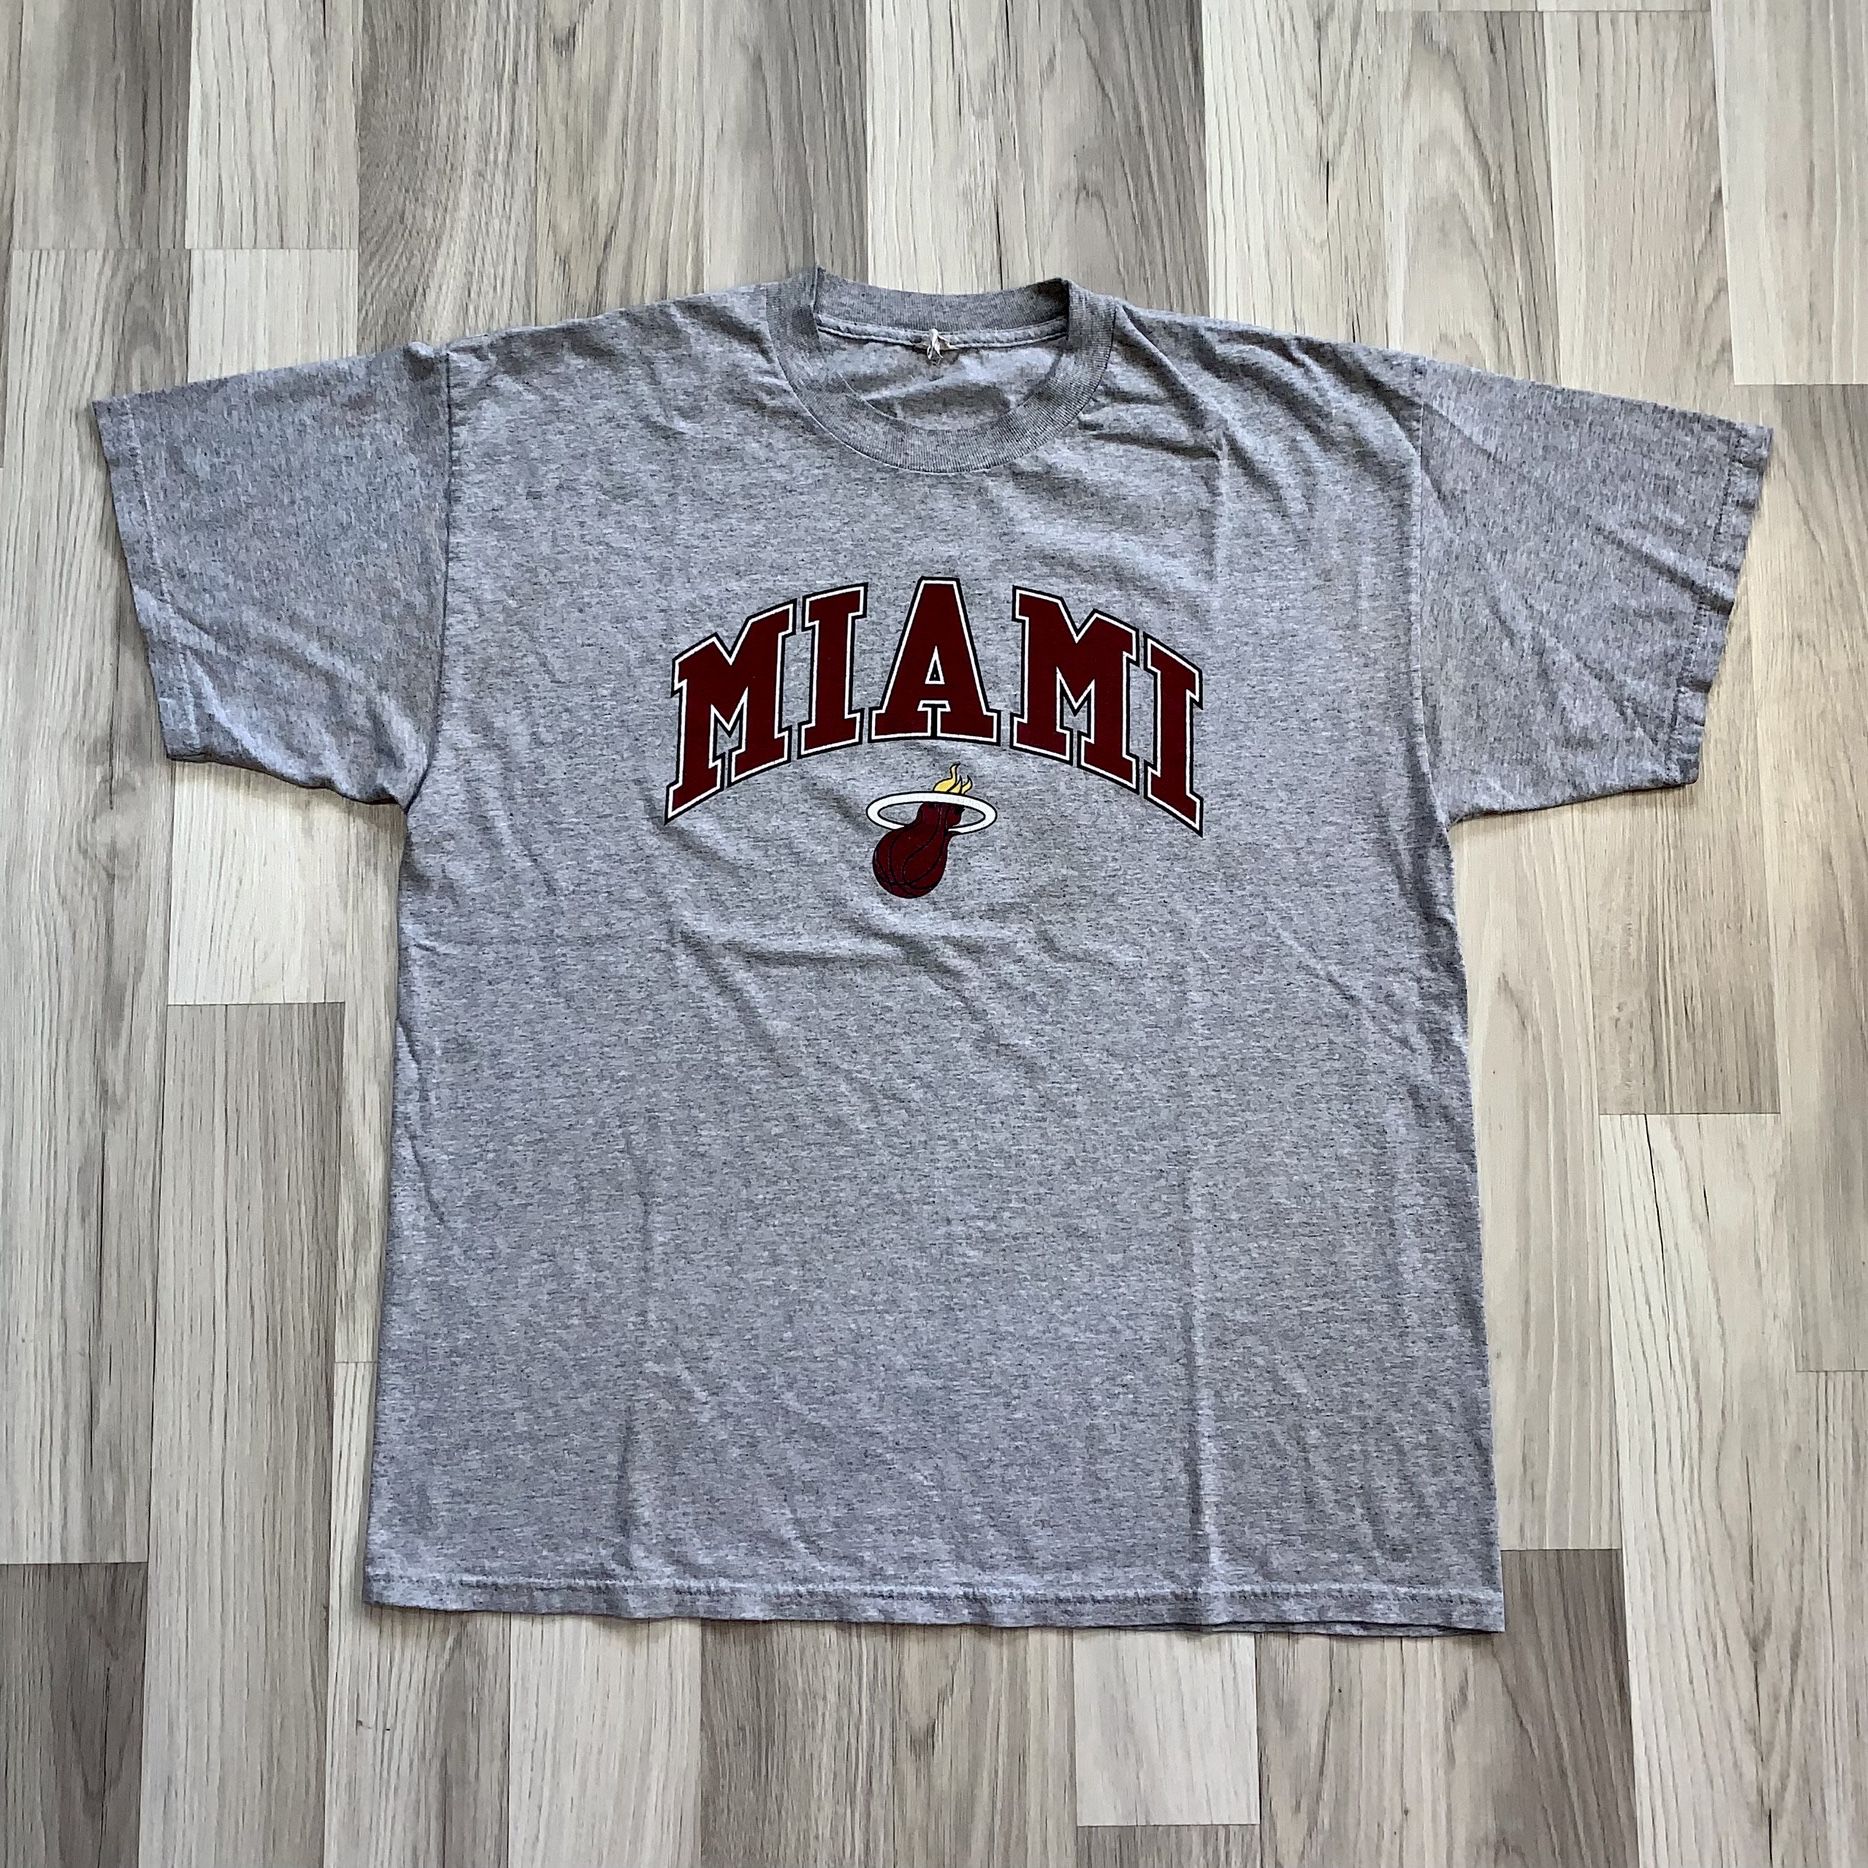 LeBron James Miami HEAT Jersey for Sale in Miami, FL - OfferUp